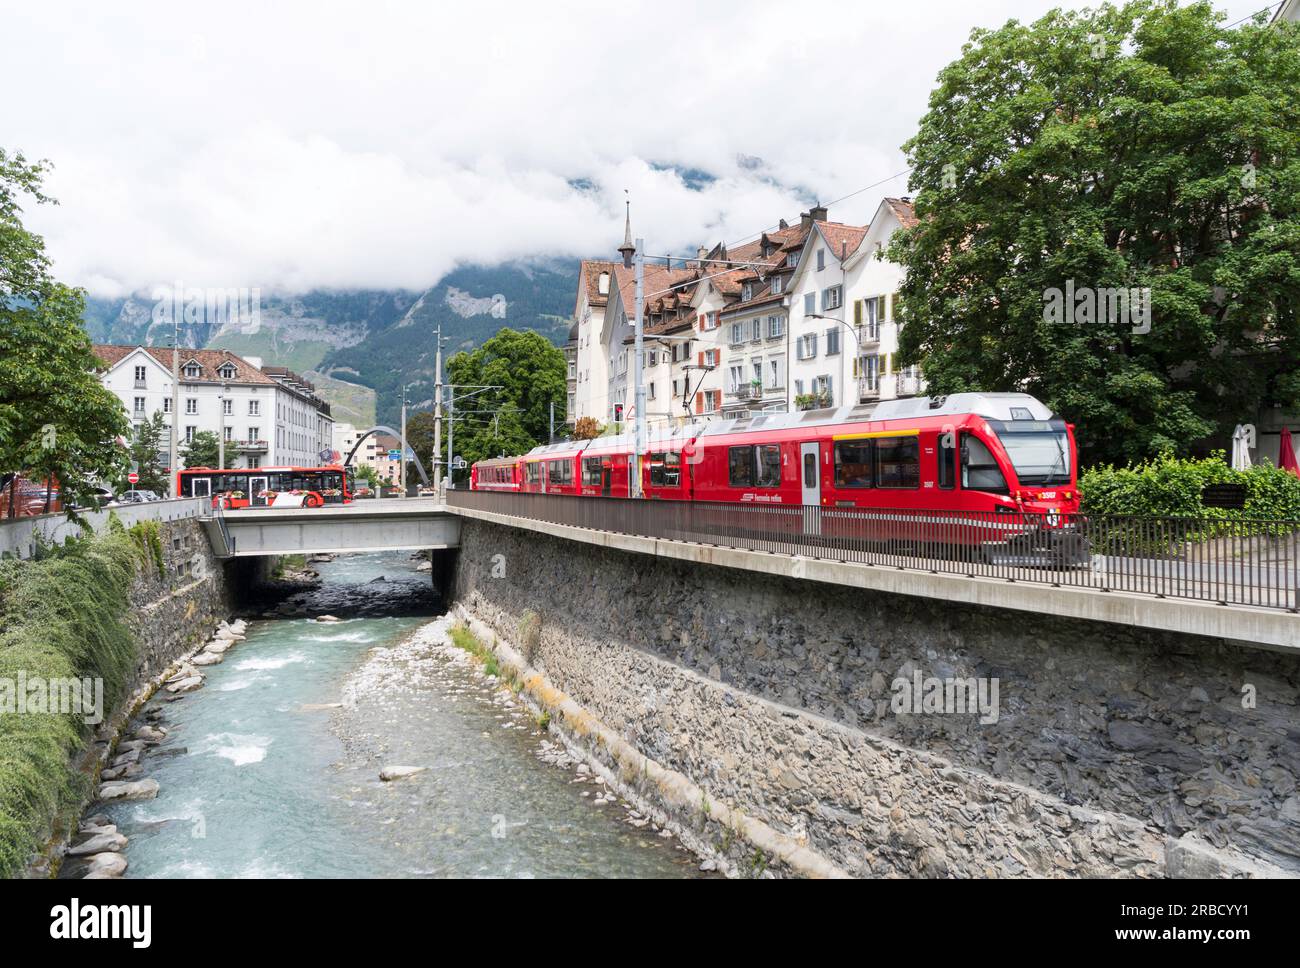 A Rhaetian Railway Ferrovia retica train alongside the river Plessur in Chur, Switzerland, Europe Stock Photo